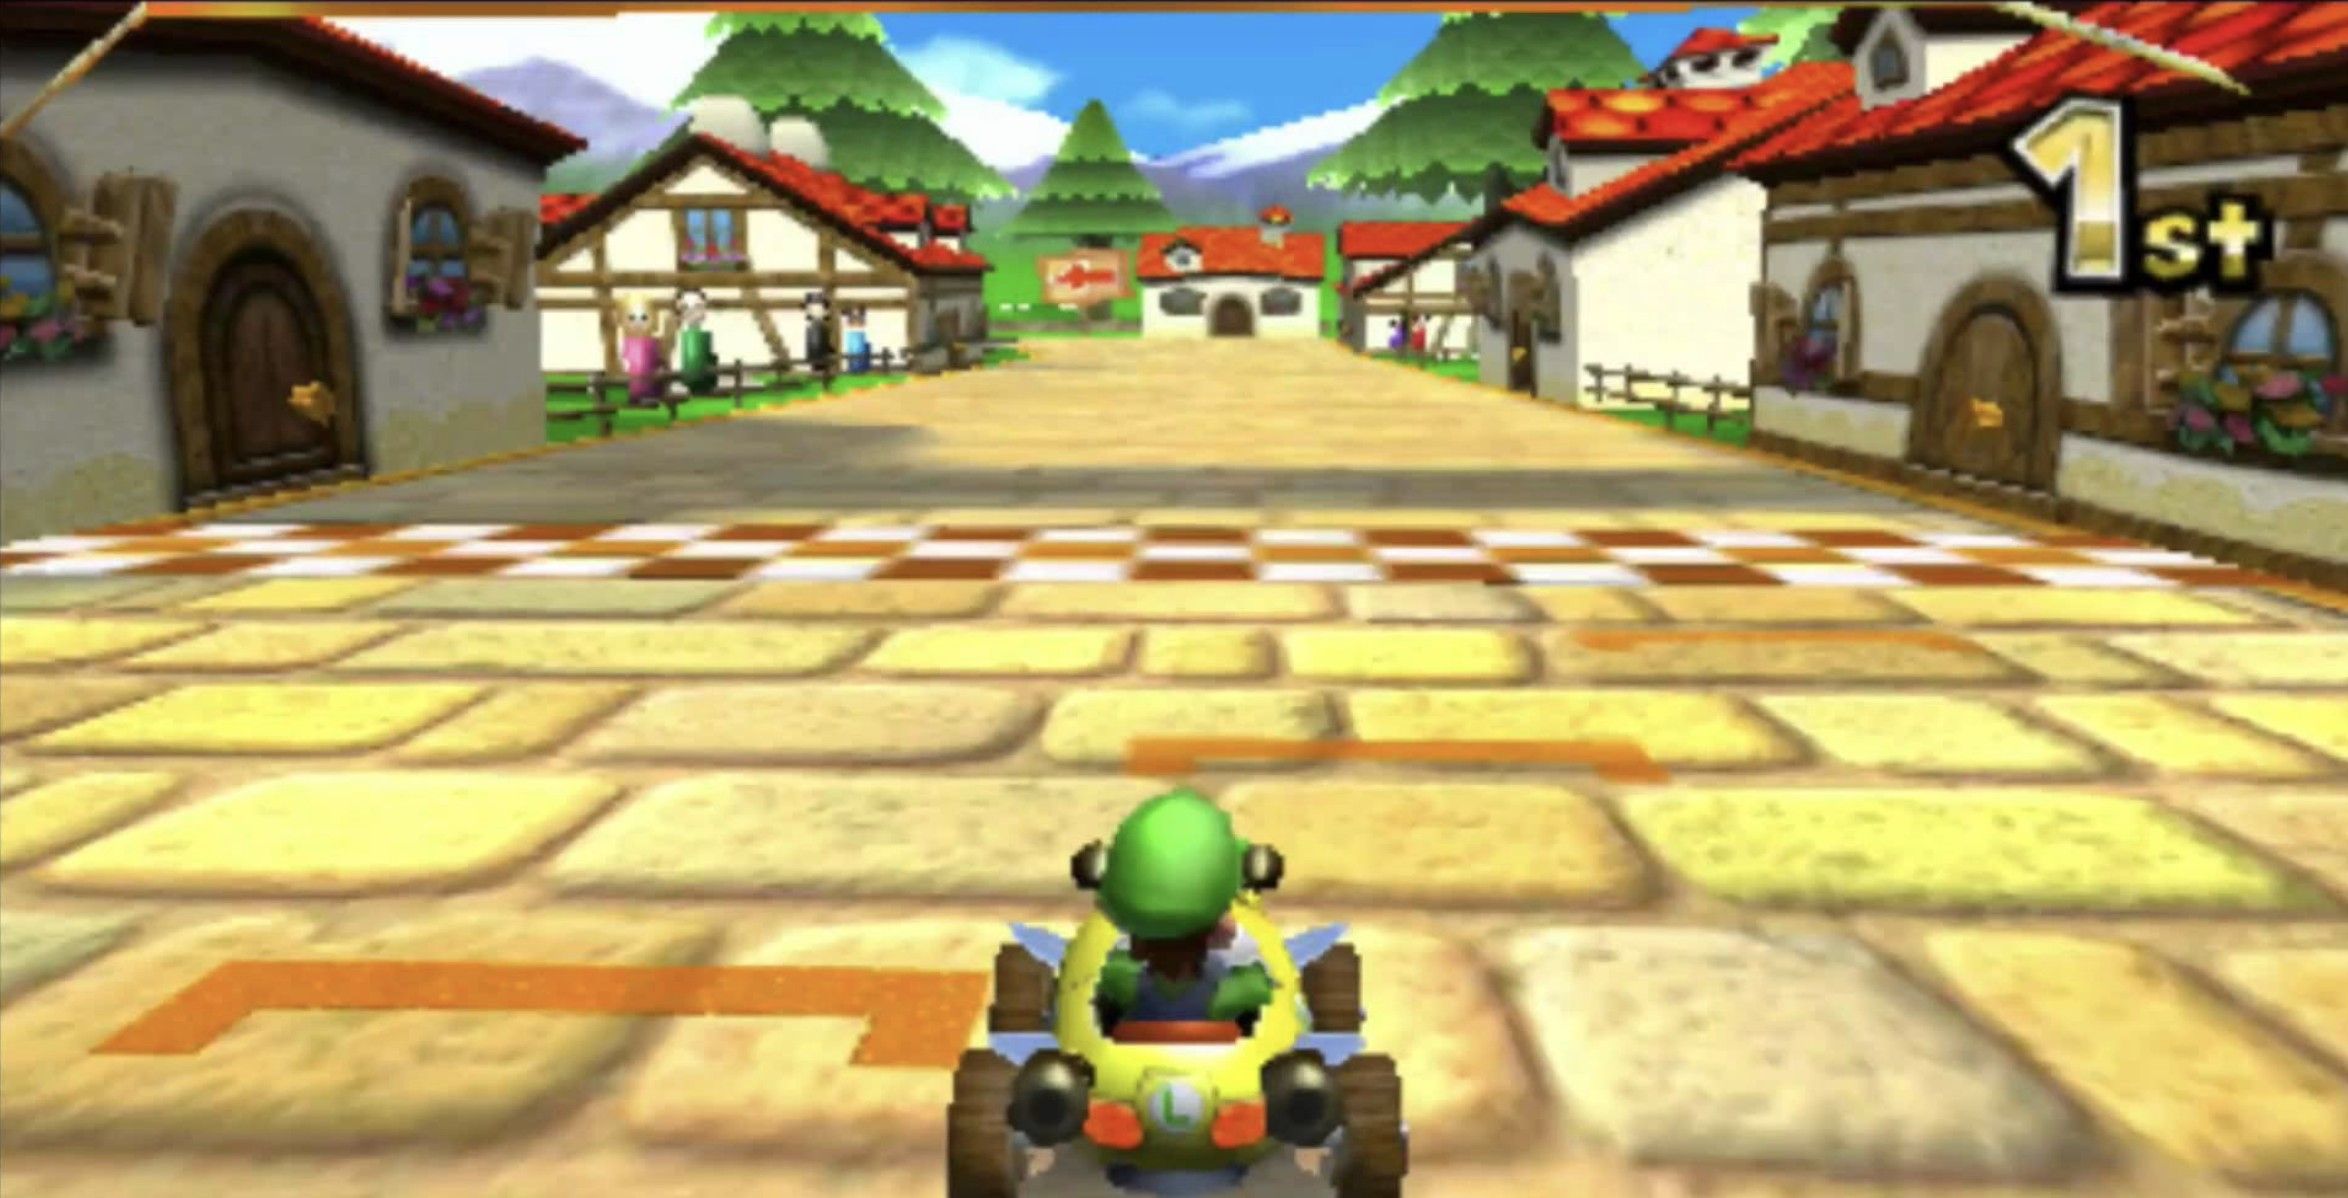 Mario Kart 7 Wallpaper